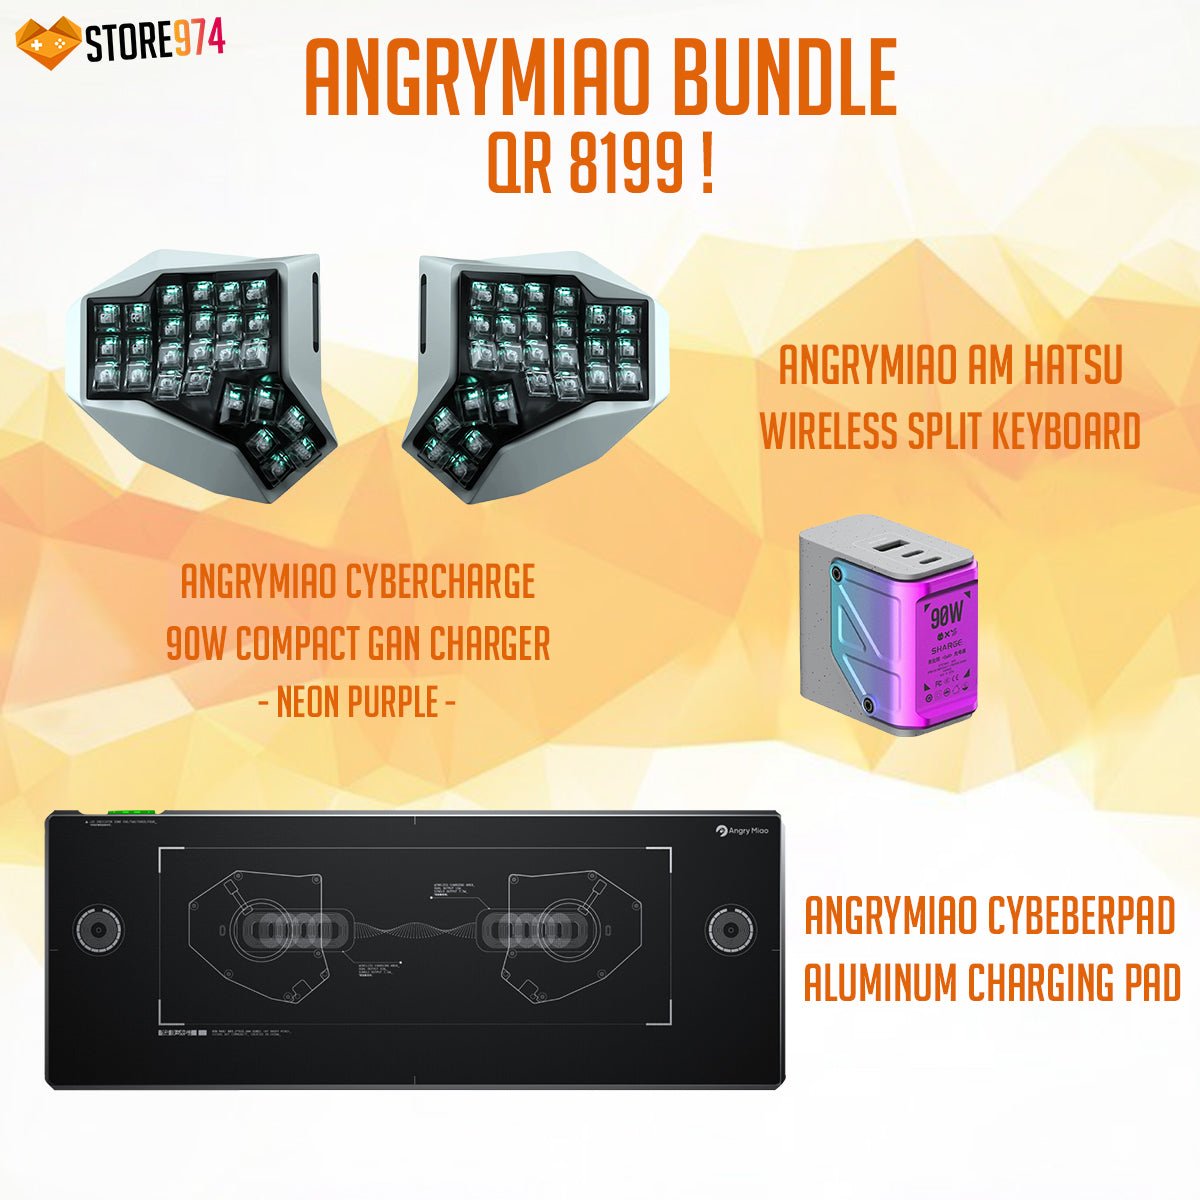 AngryMiao AM HATSU Wireless Split Keyboard + CyberMat Wireless Charging Pad + CyberCharge 90W Charger - Store 974 | ستور ٩٧٤